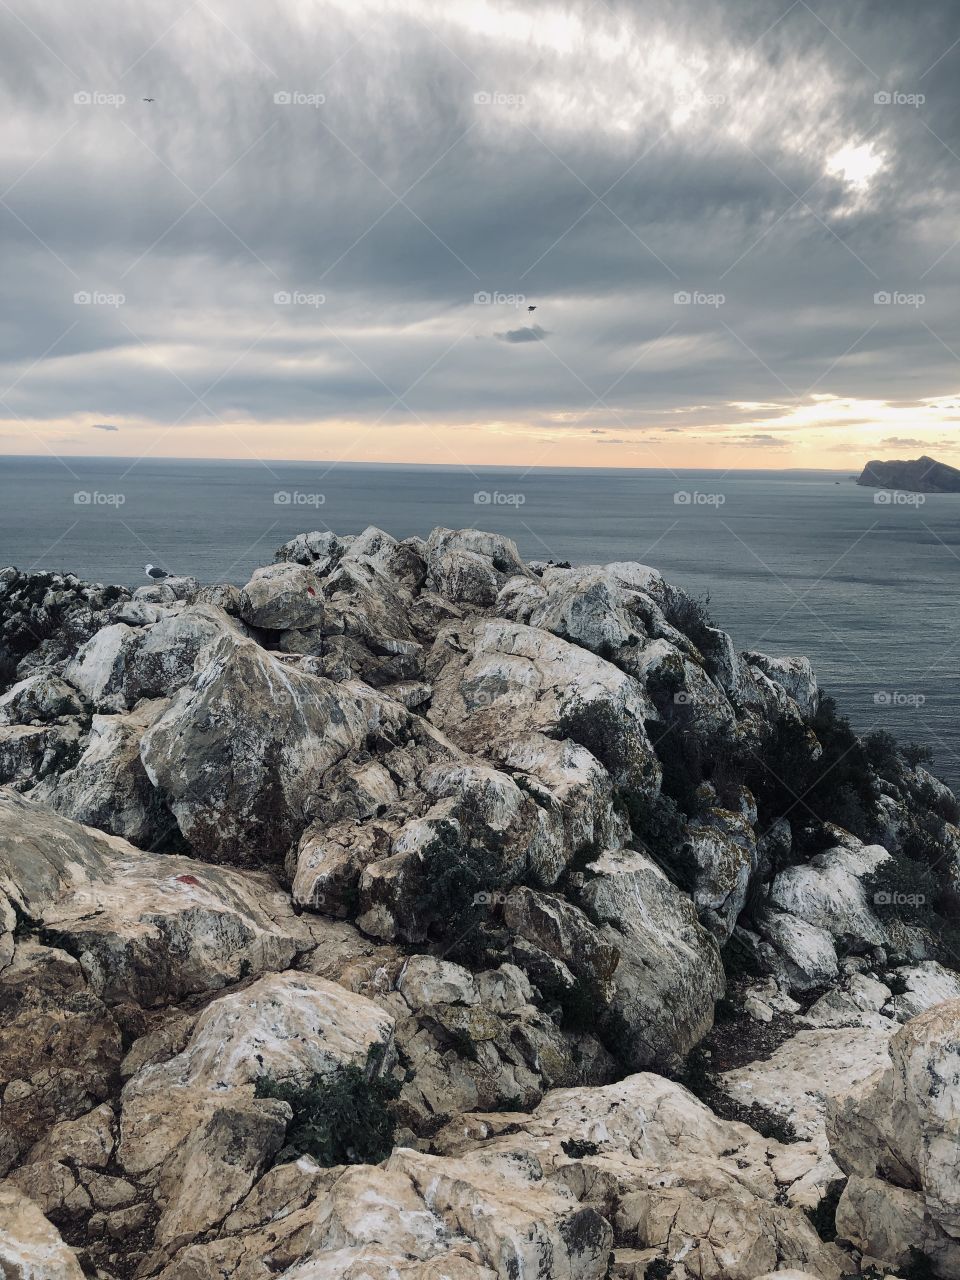 Sea rocks landscape view